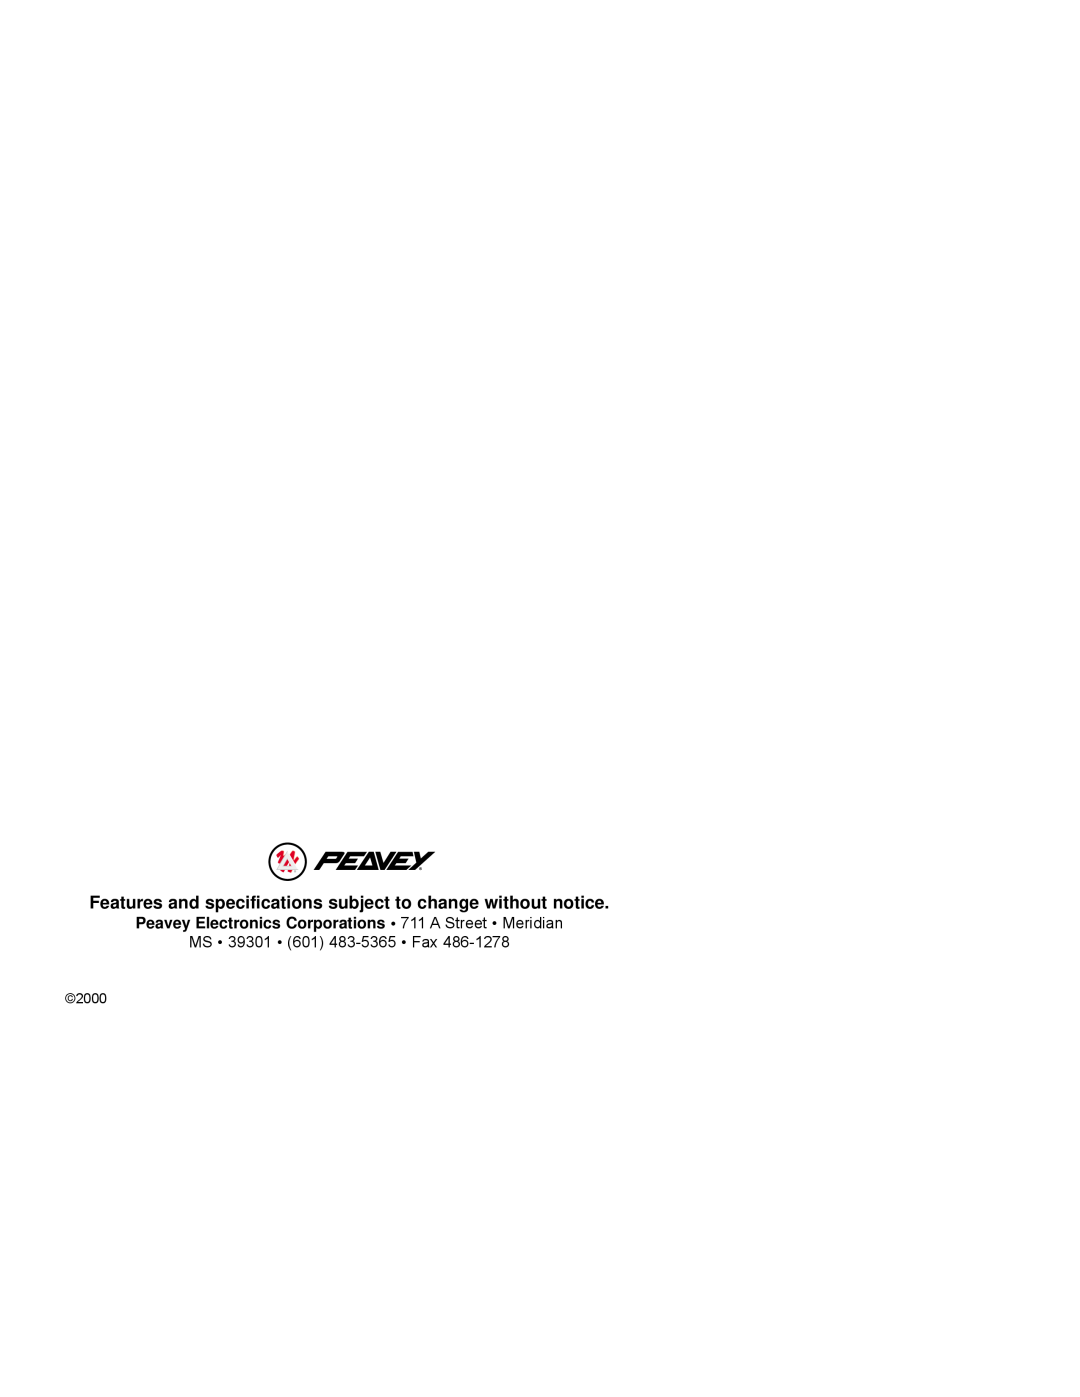 Peavey PCX-V12 manual MS 39301 601 483-5365 Fax, 2000 